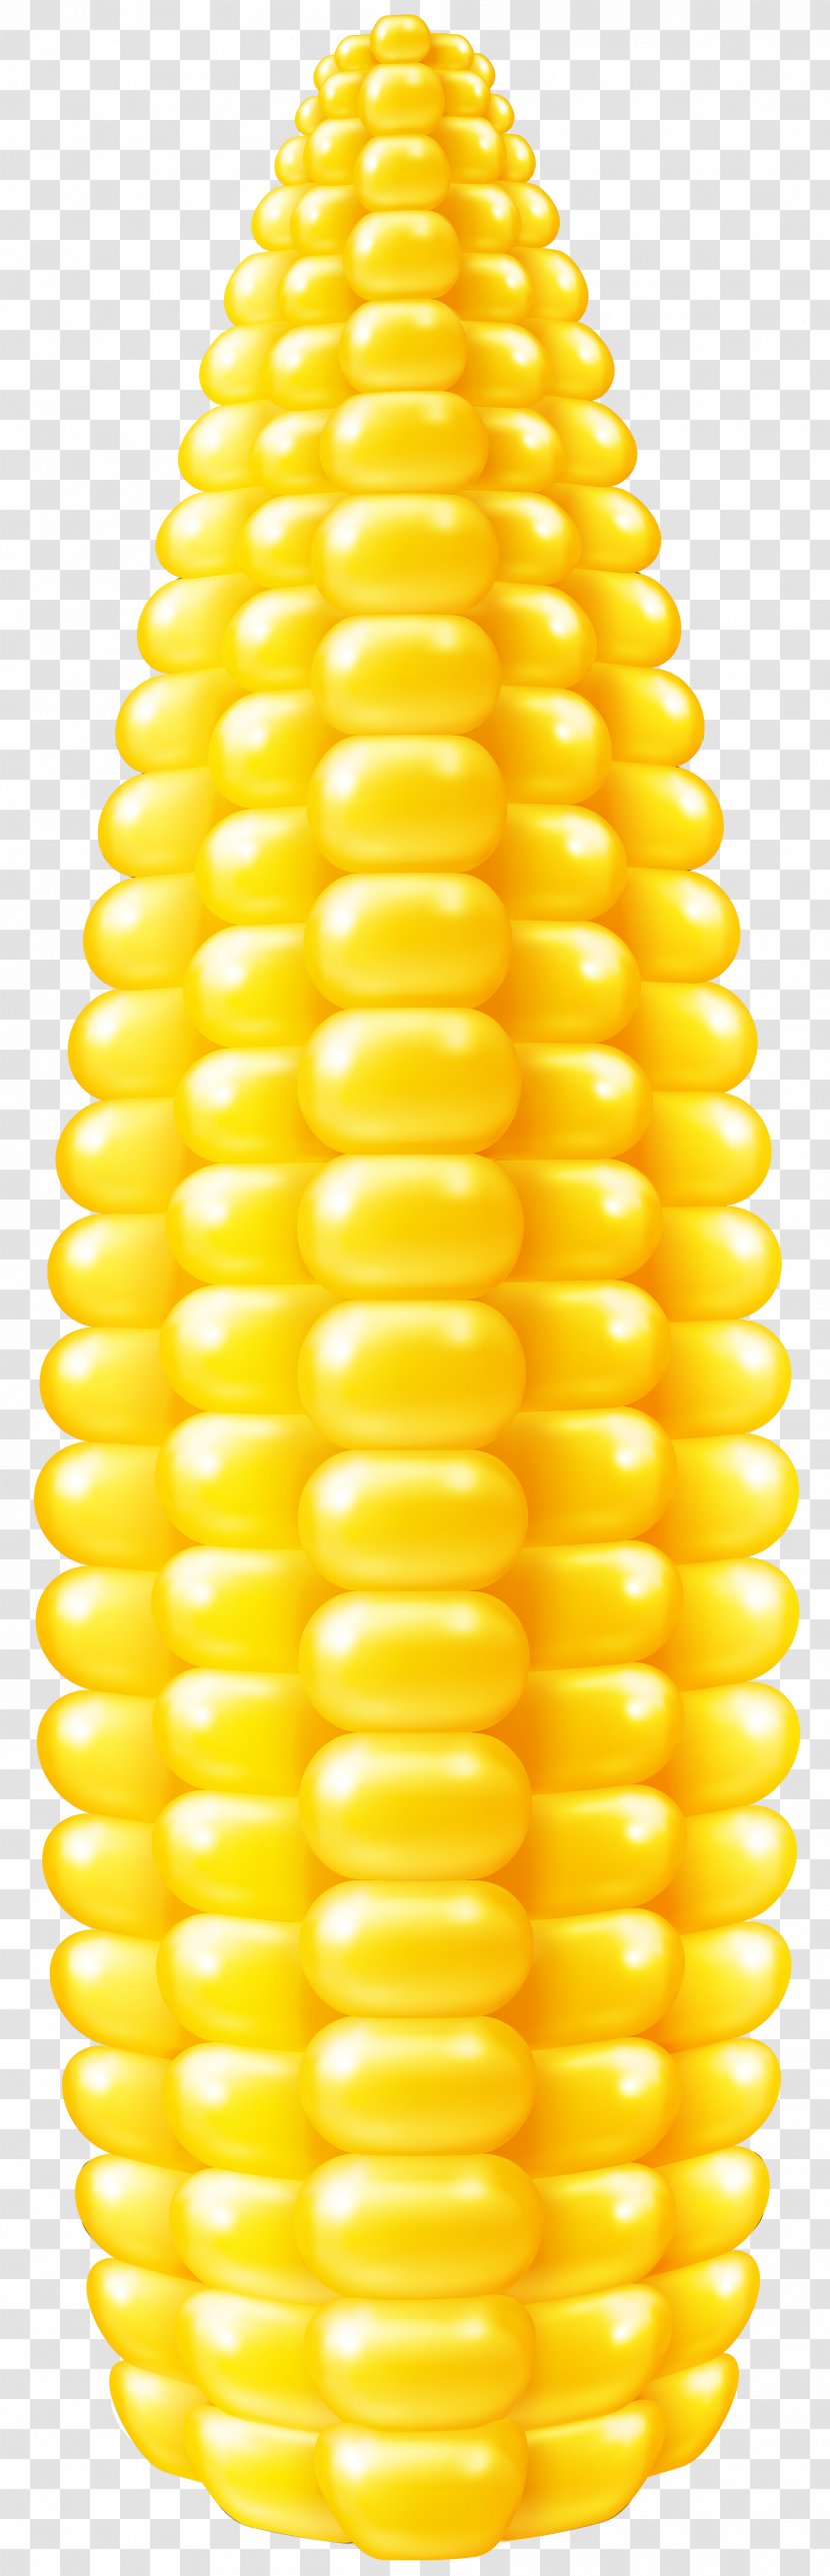 Corn On The Cob Drawing Maize Clip Art Transparent PNG